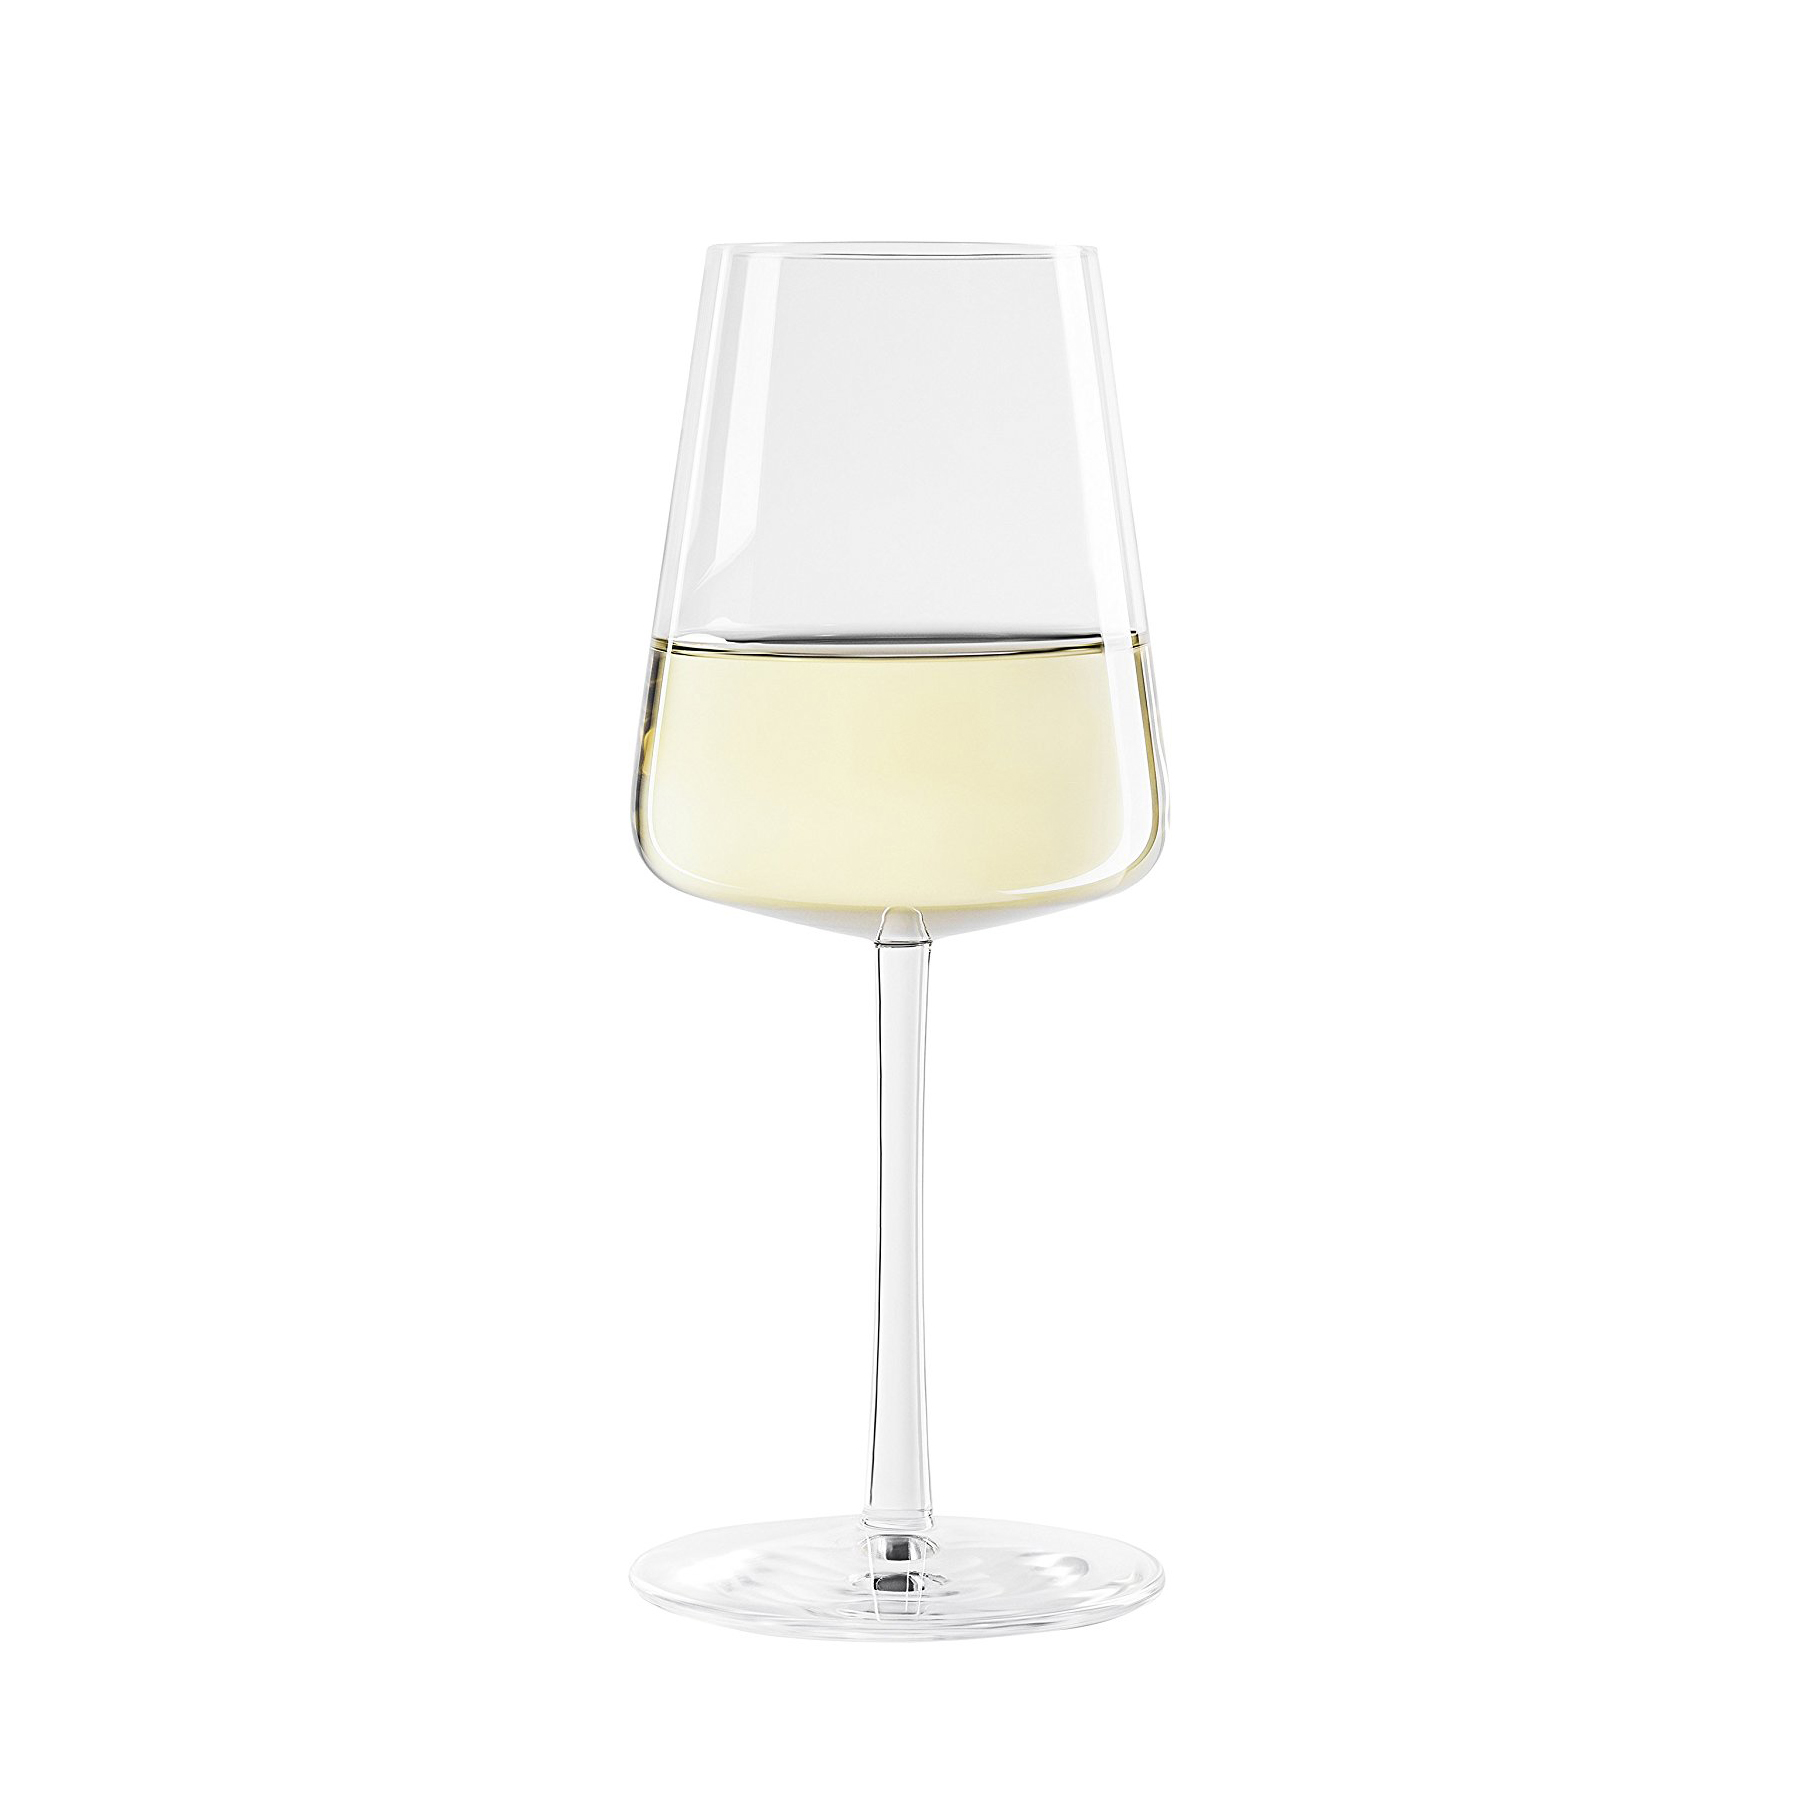 Ritzenhoff Lichtweiss Set 6 calici vino bianco + 6 bicchieri acqua -  Gasparetto 1945